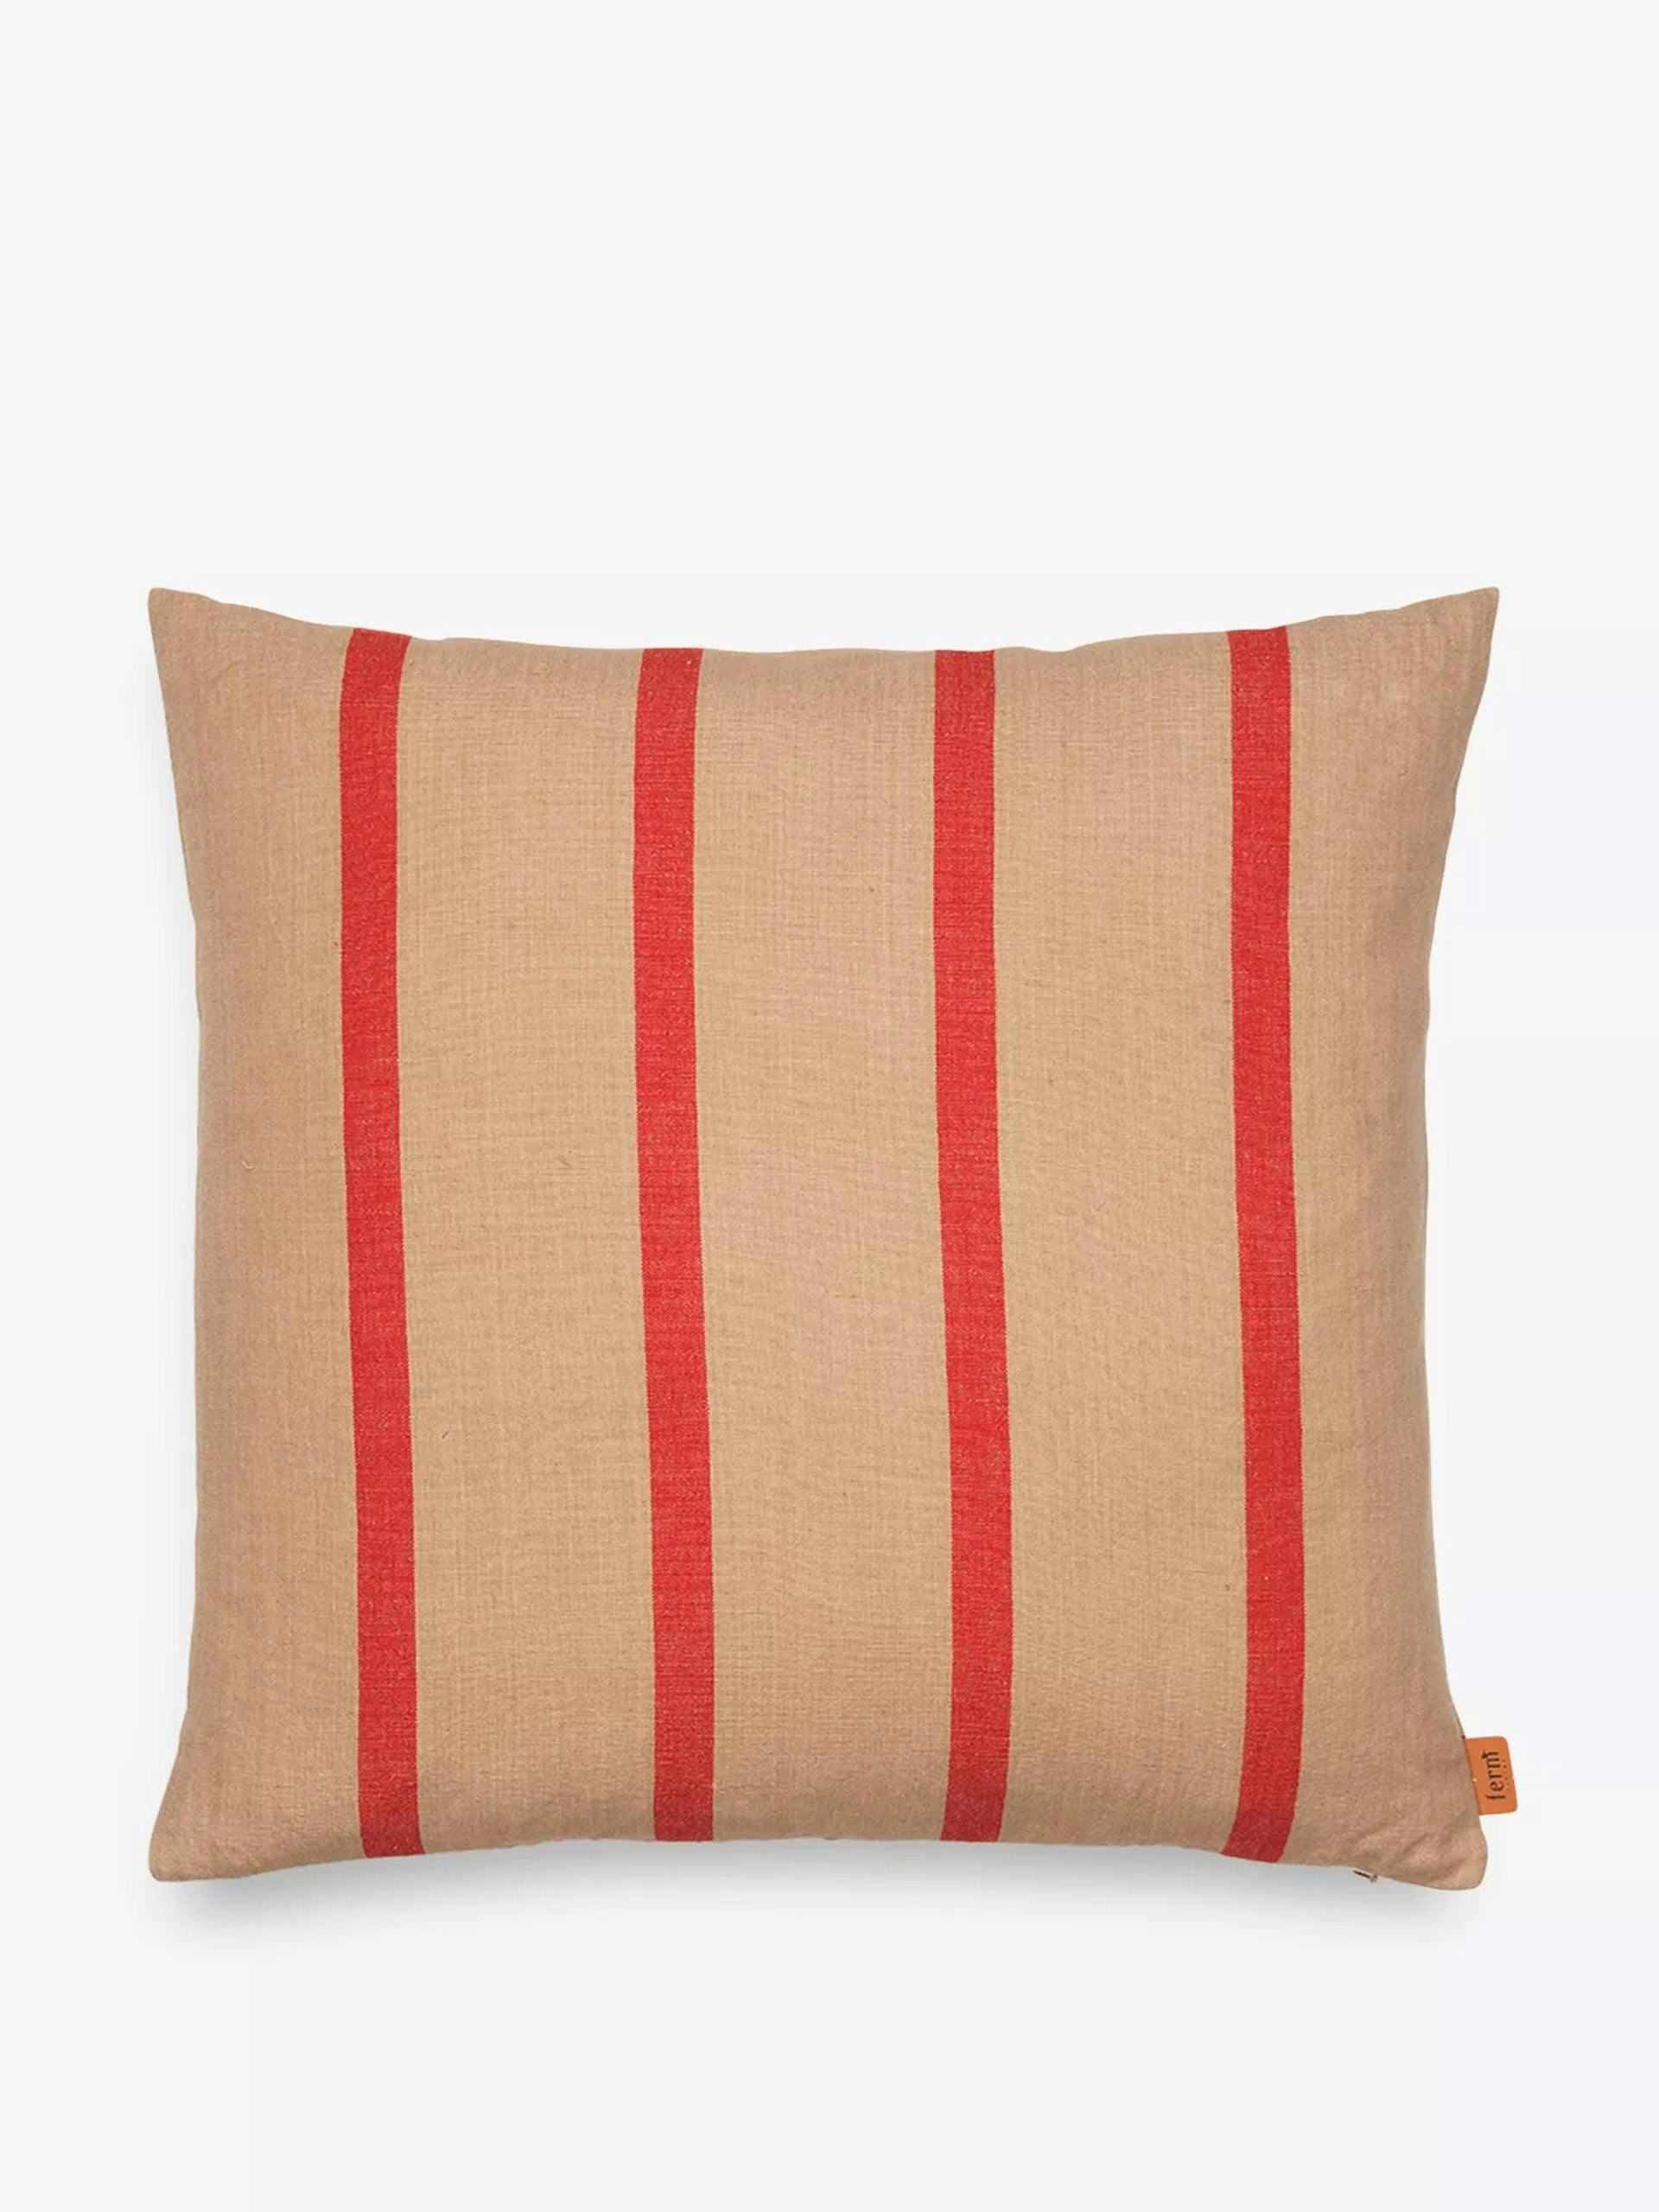 Grand stripe cotton and linen-blend cushion